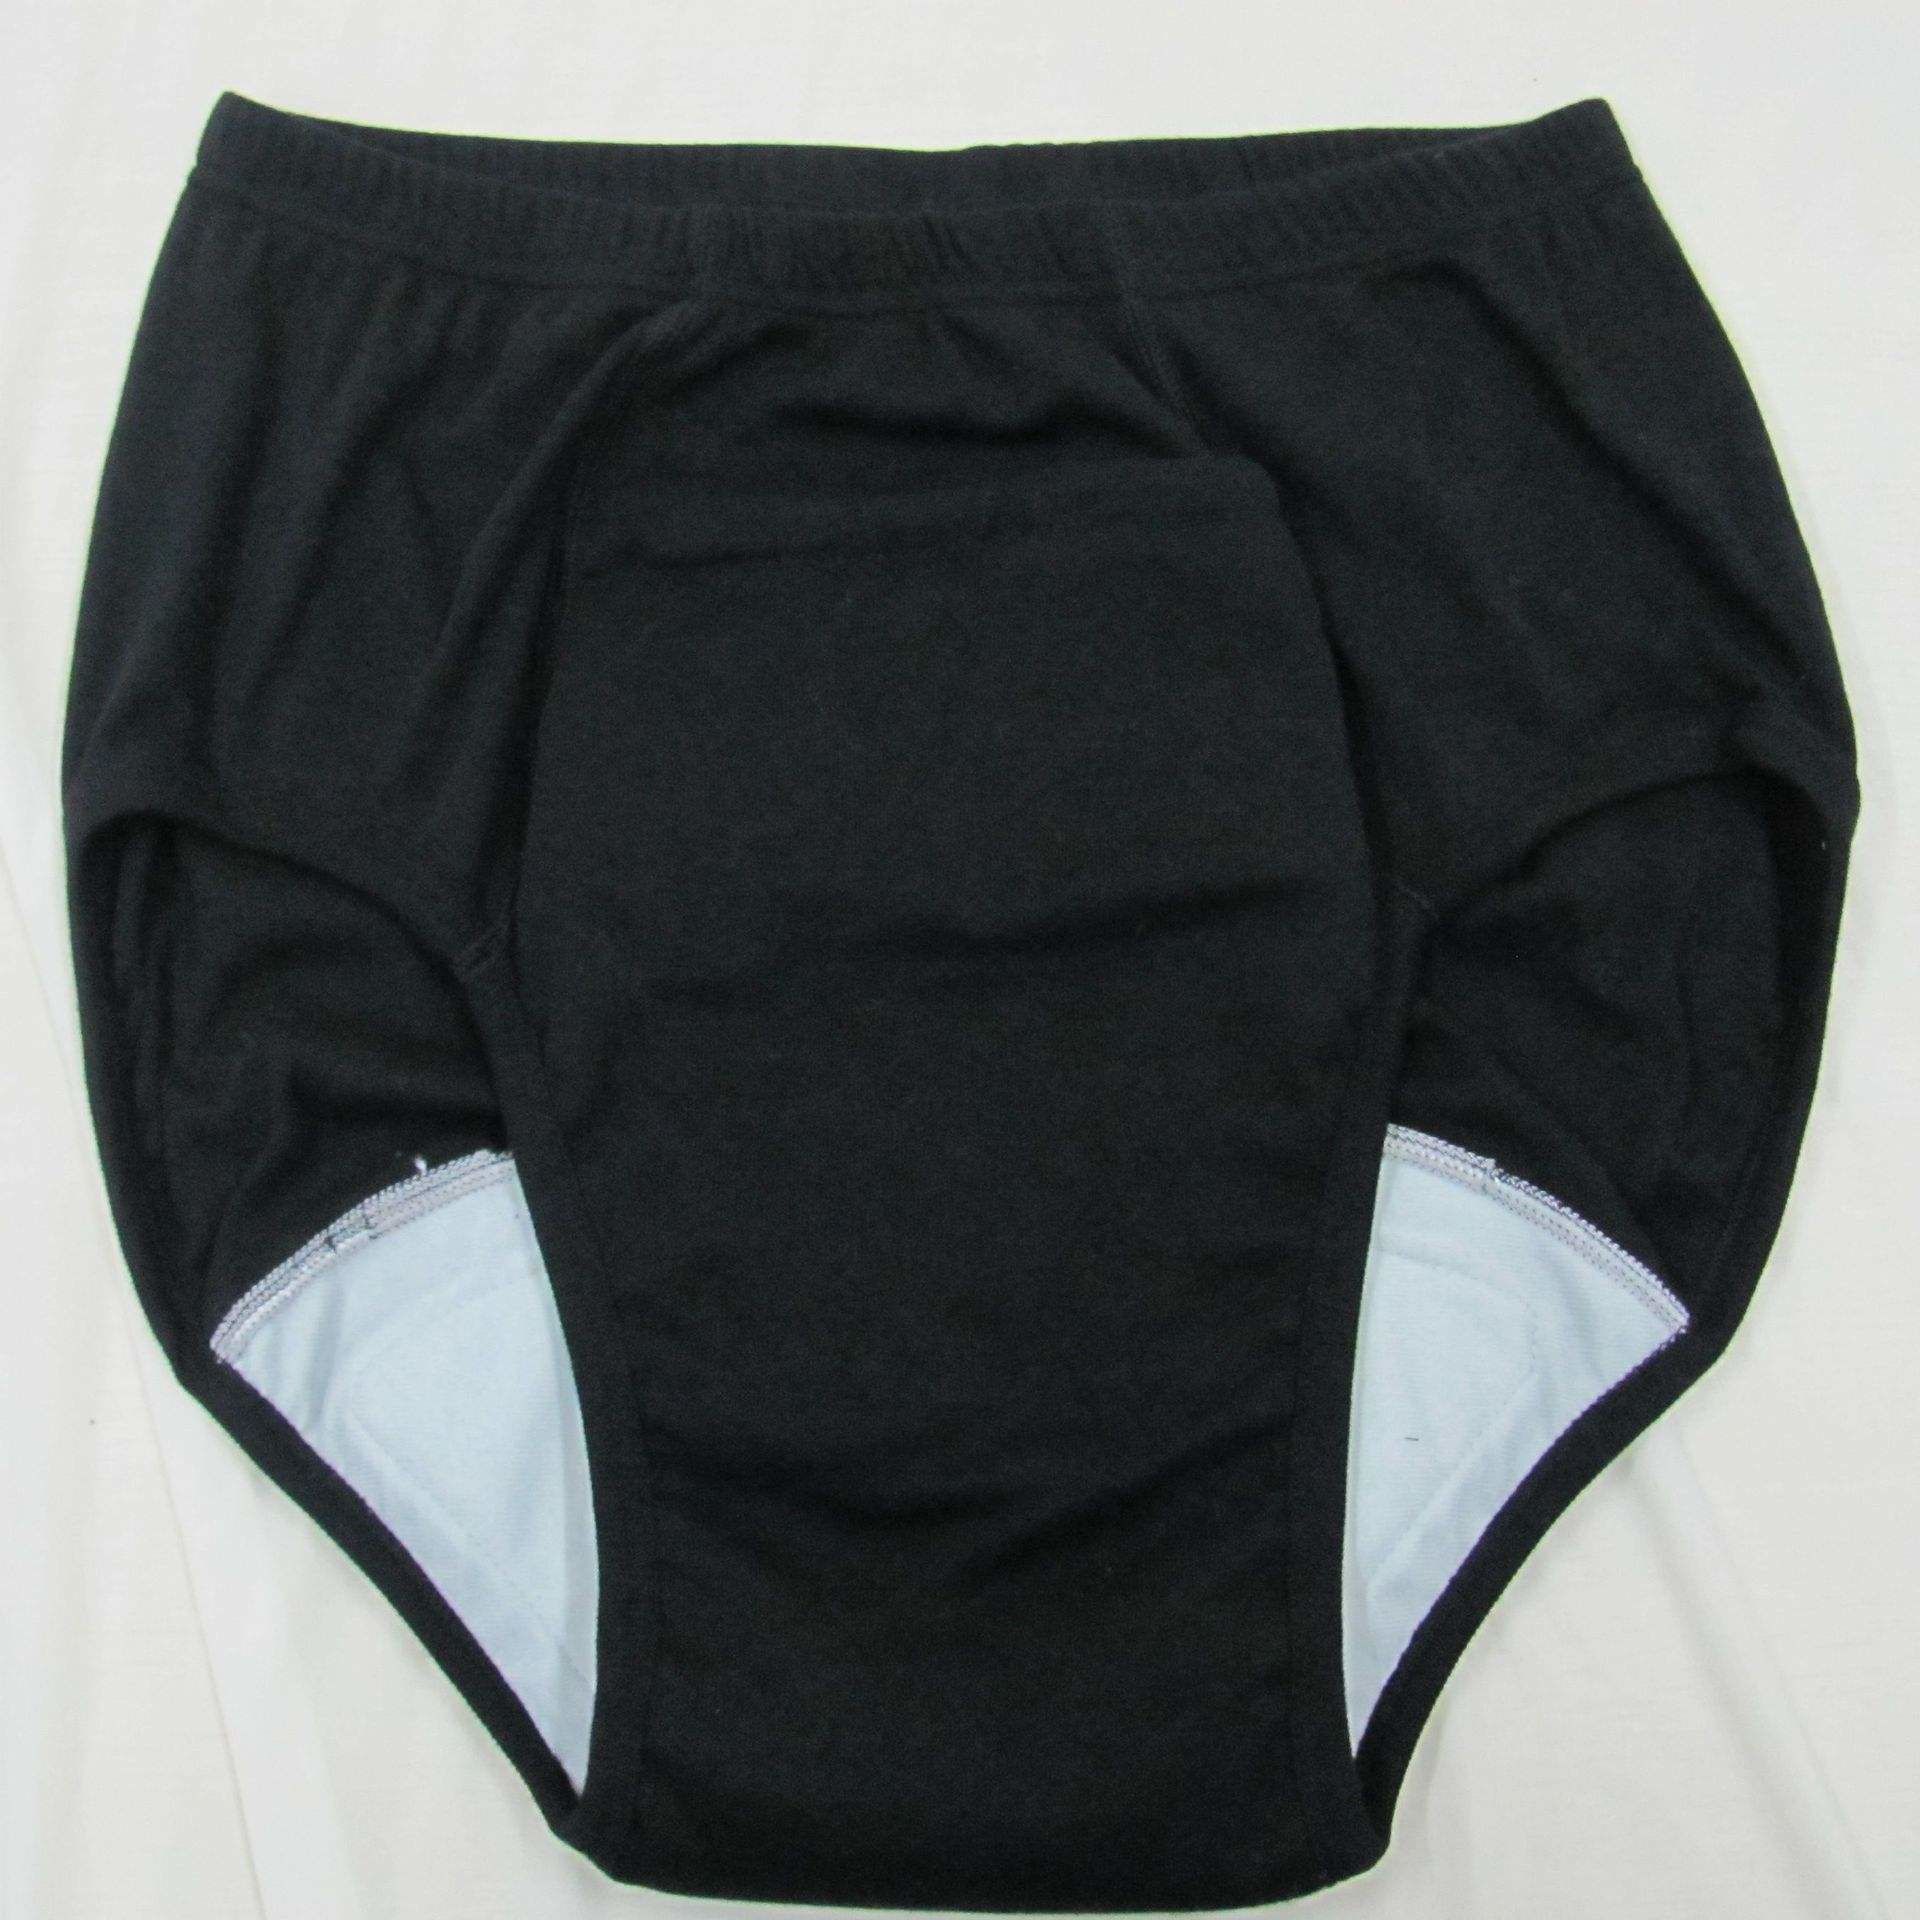 Newest Design Reusable Cotton Incontinence Underwear for Men